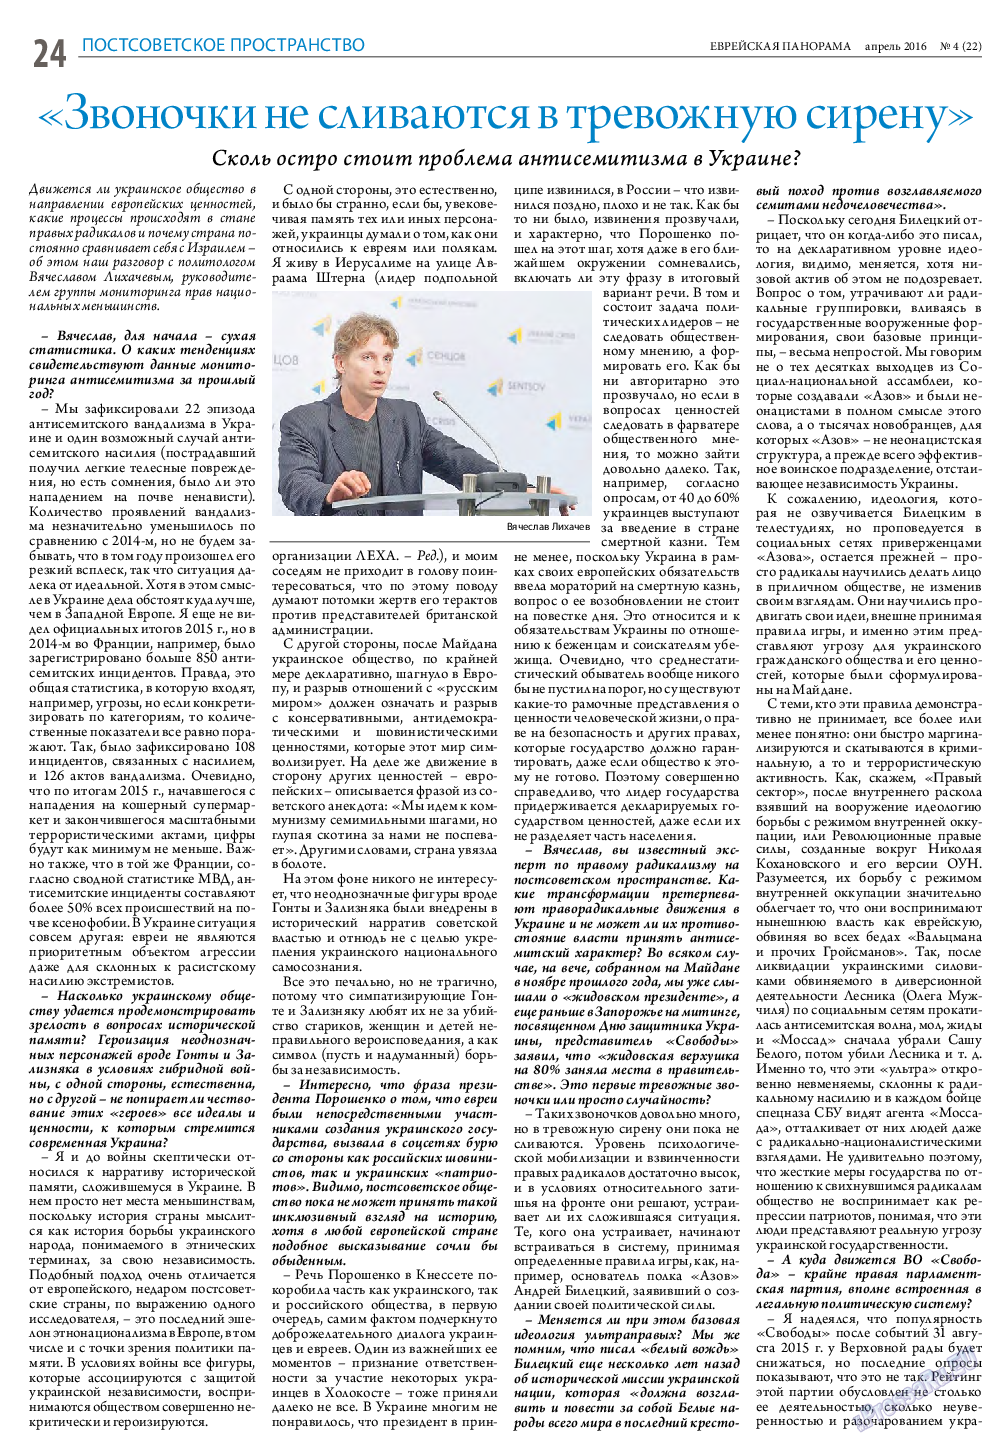 Еврейская панорама, газета. 2016 №4 стр.24